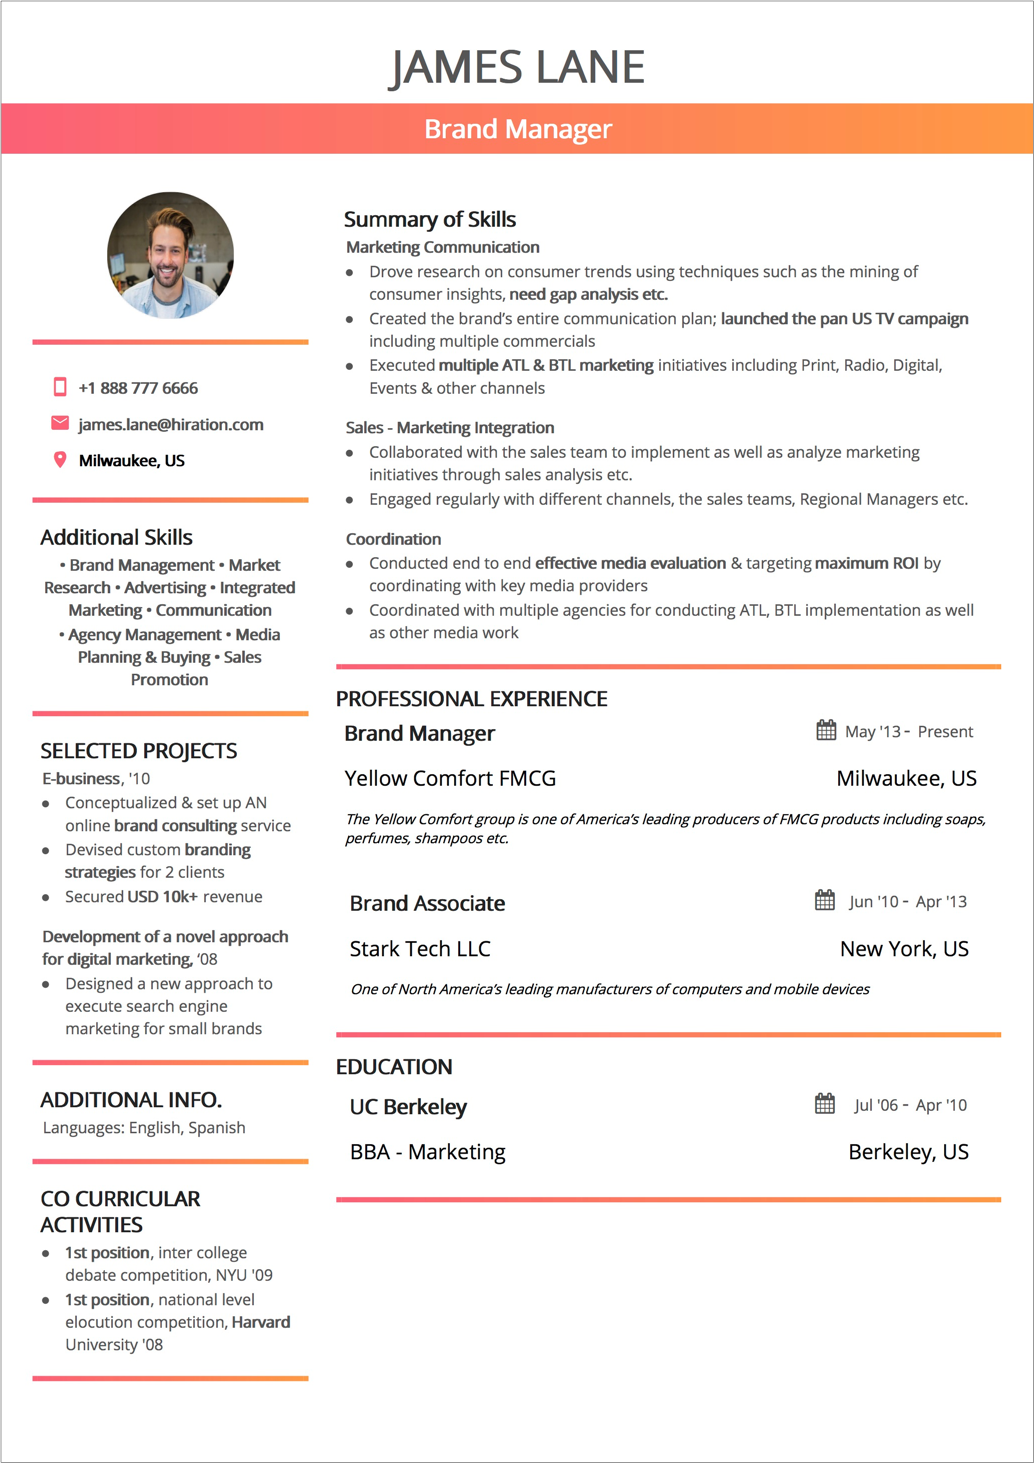 Functional Resume Template Functional Resume Format 1 functional resume template|wikiresume.com